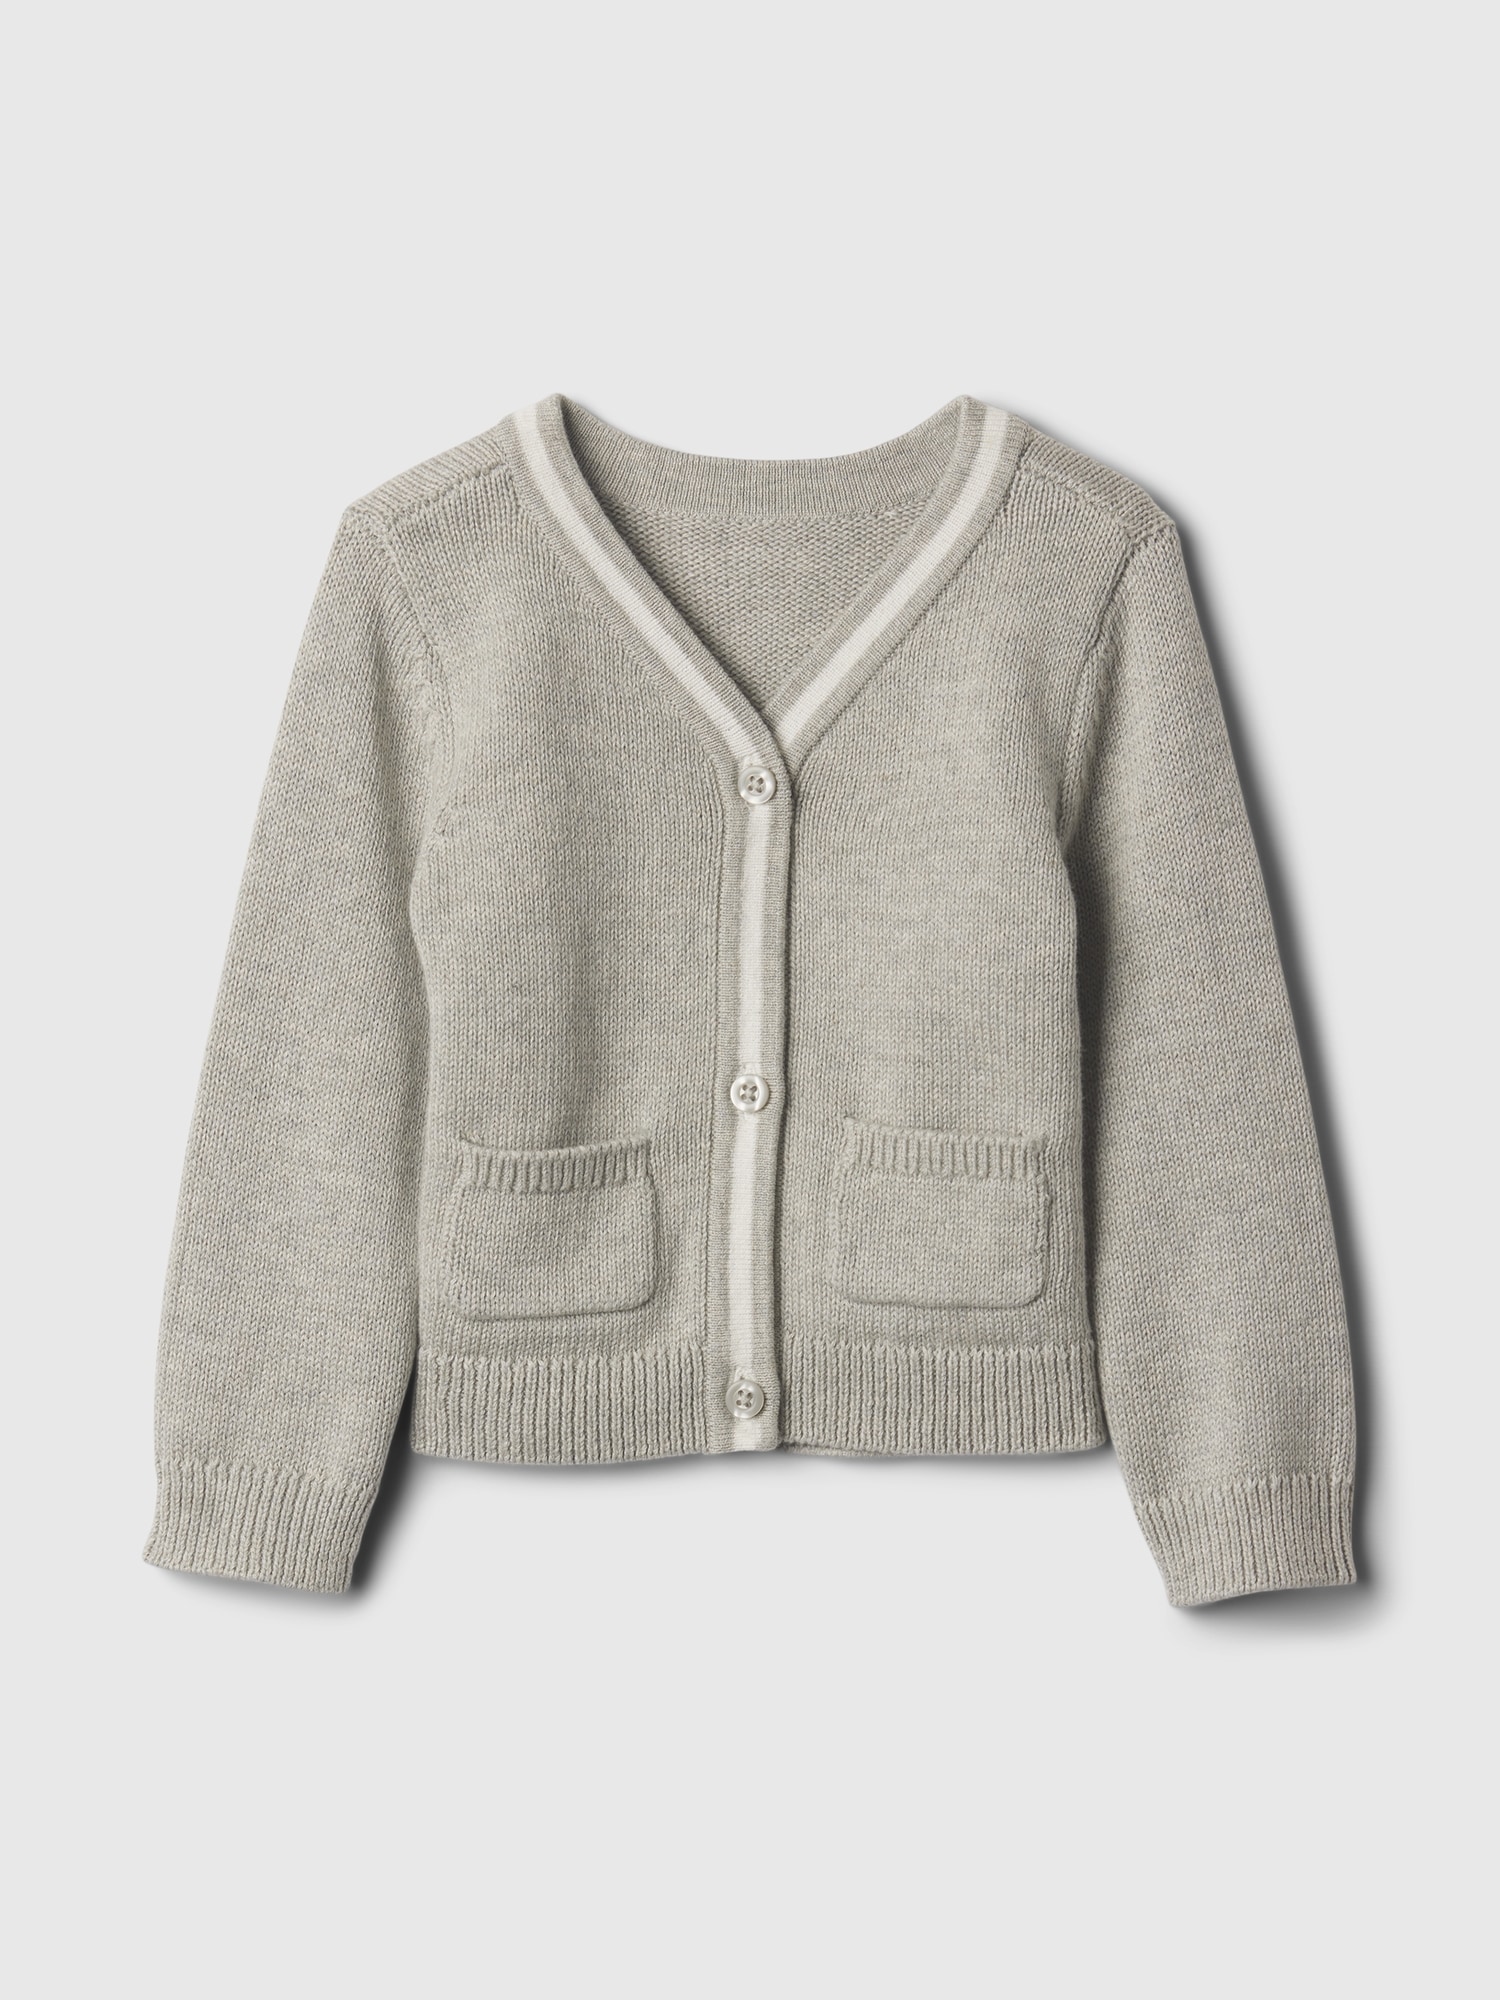 Baby Cardigan Sweater